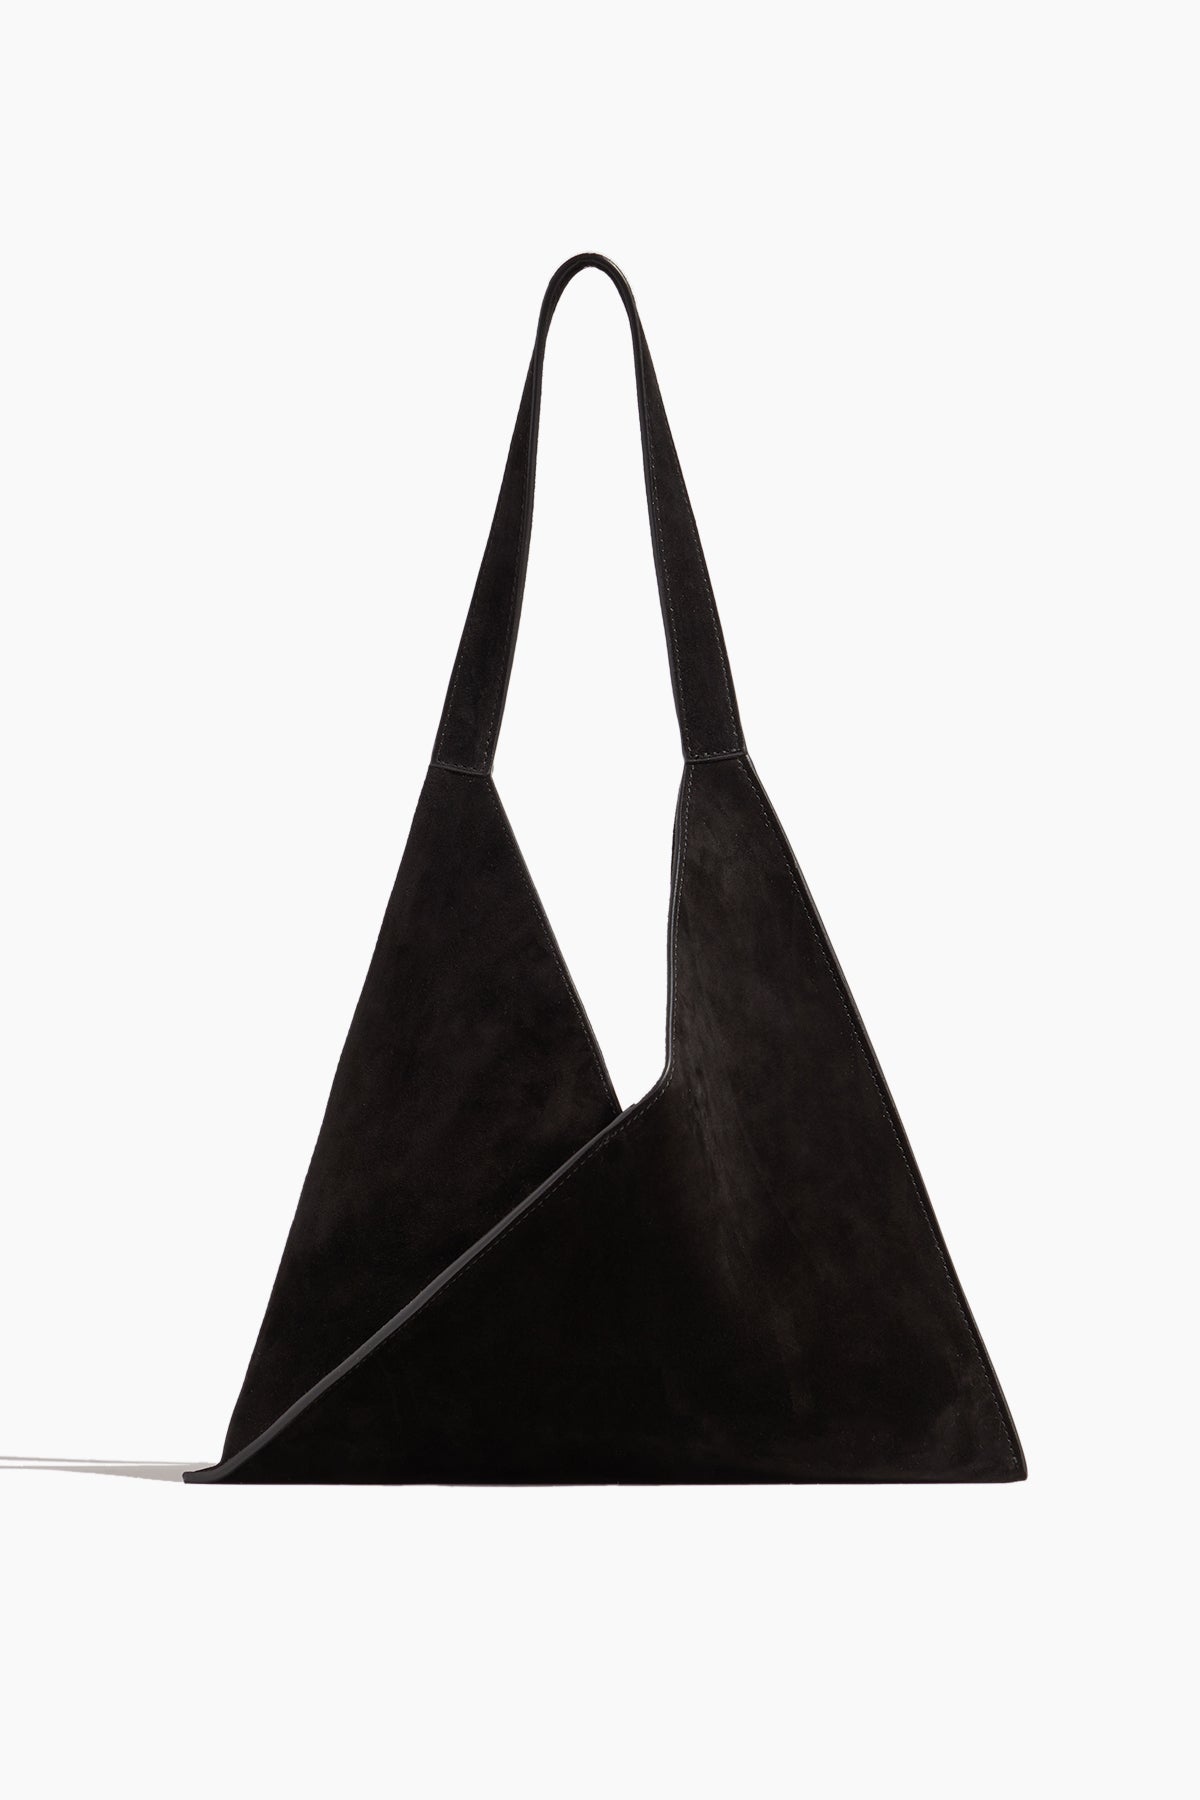 Khaite Sara Small Tote Bag in Black - Black - Size: One size